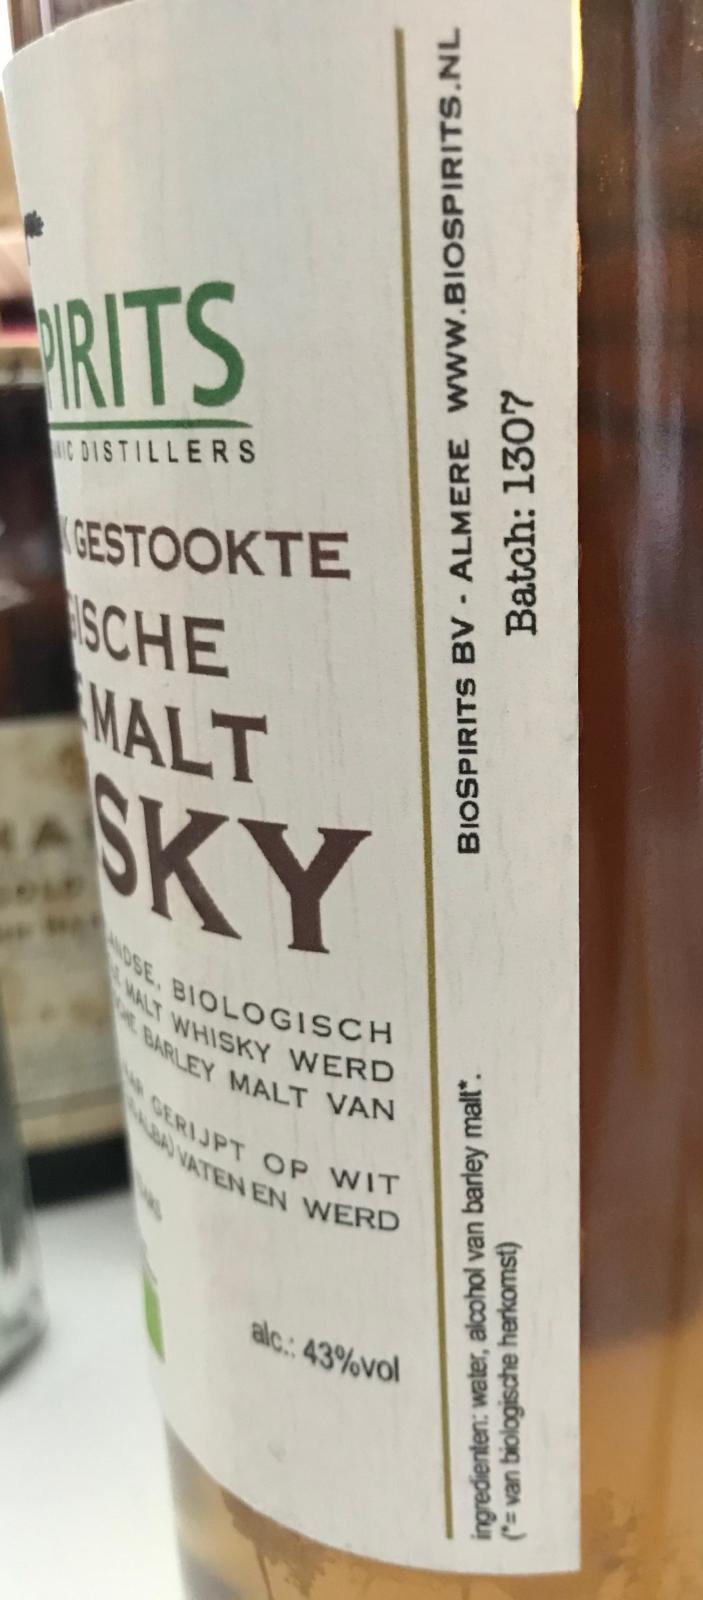 Single Malt Whisky 05-year-old